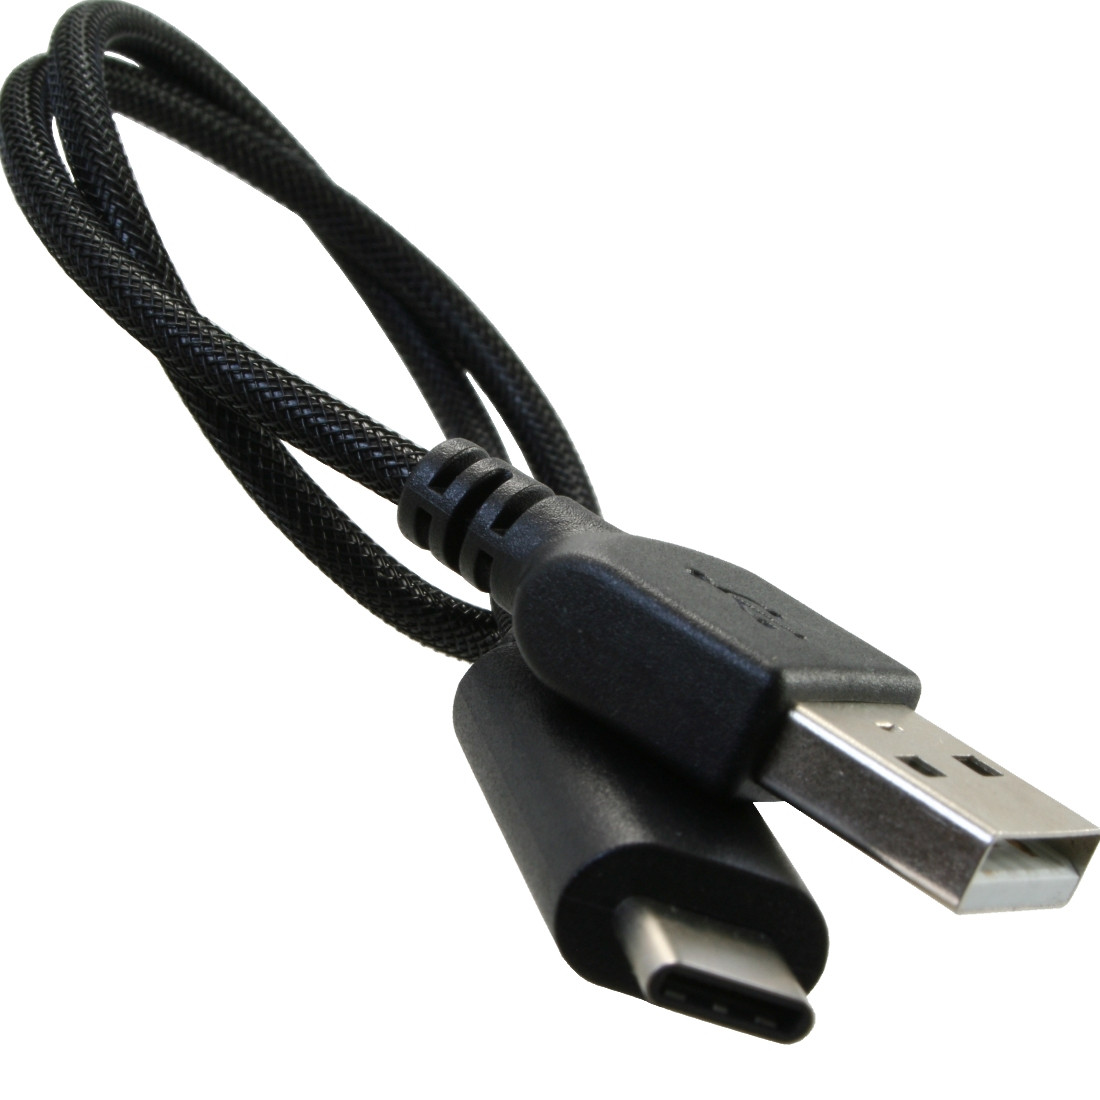 USB Typ C Kabel für MobileDock LM550